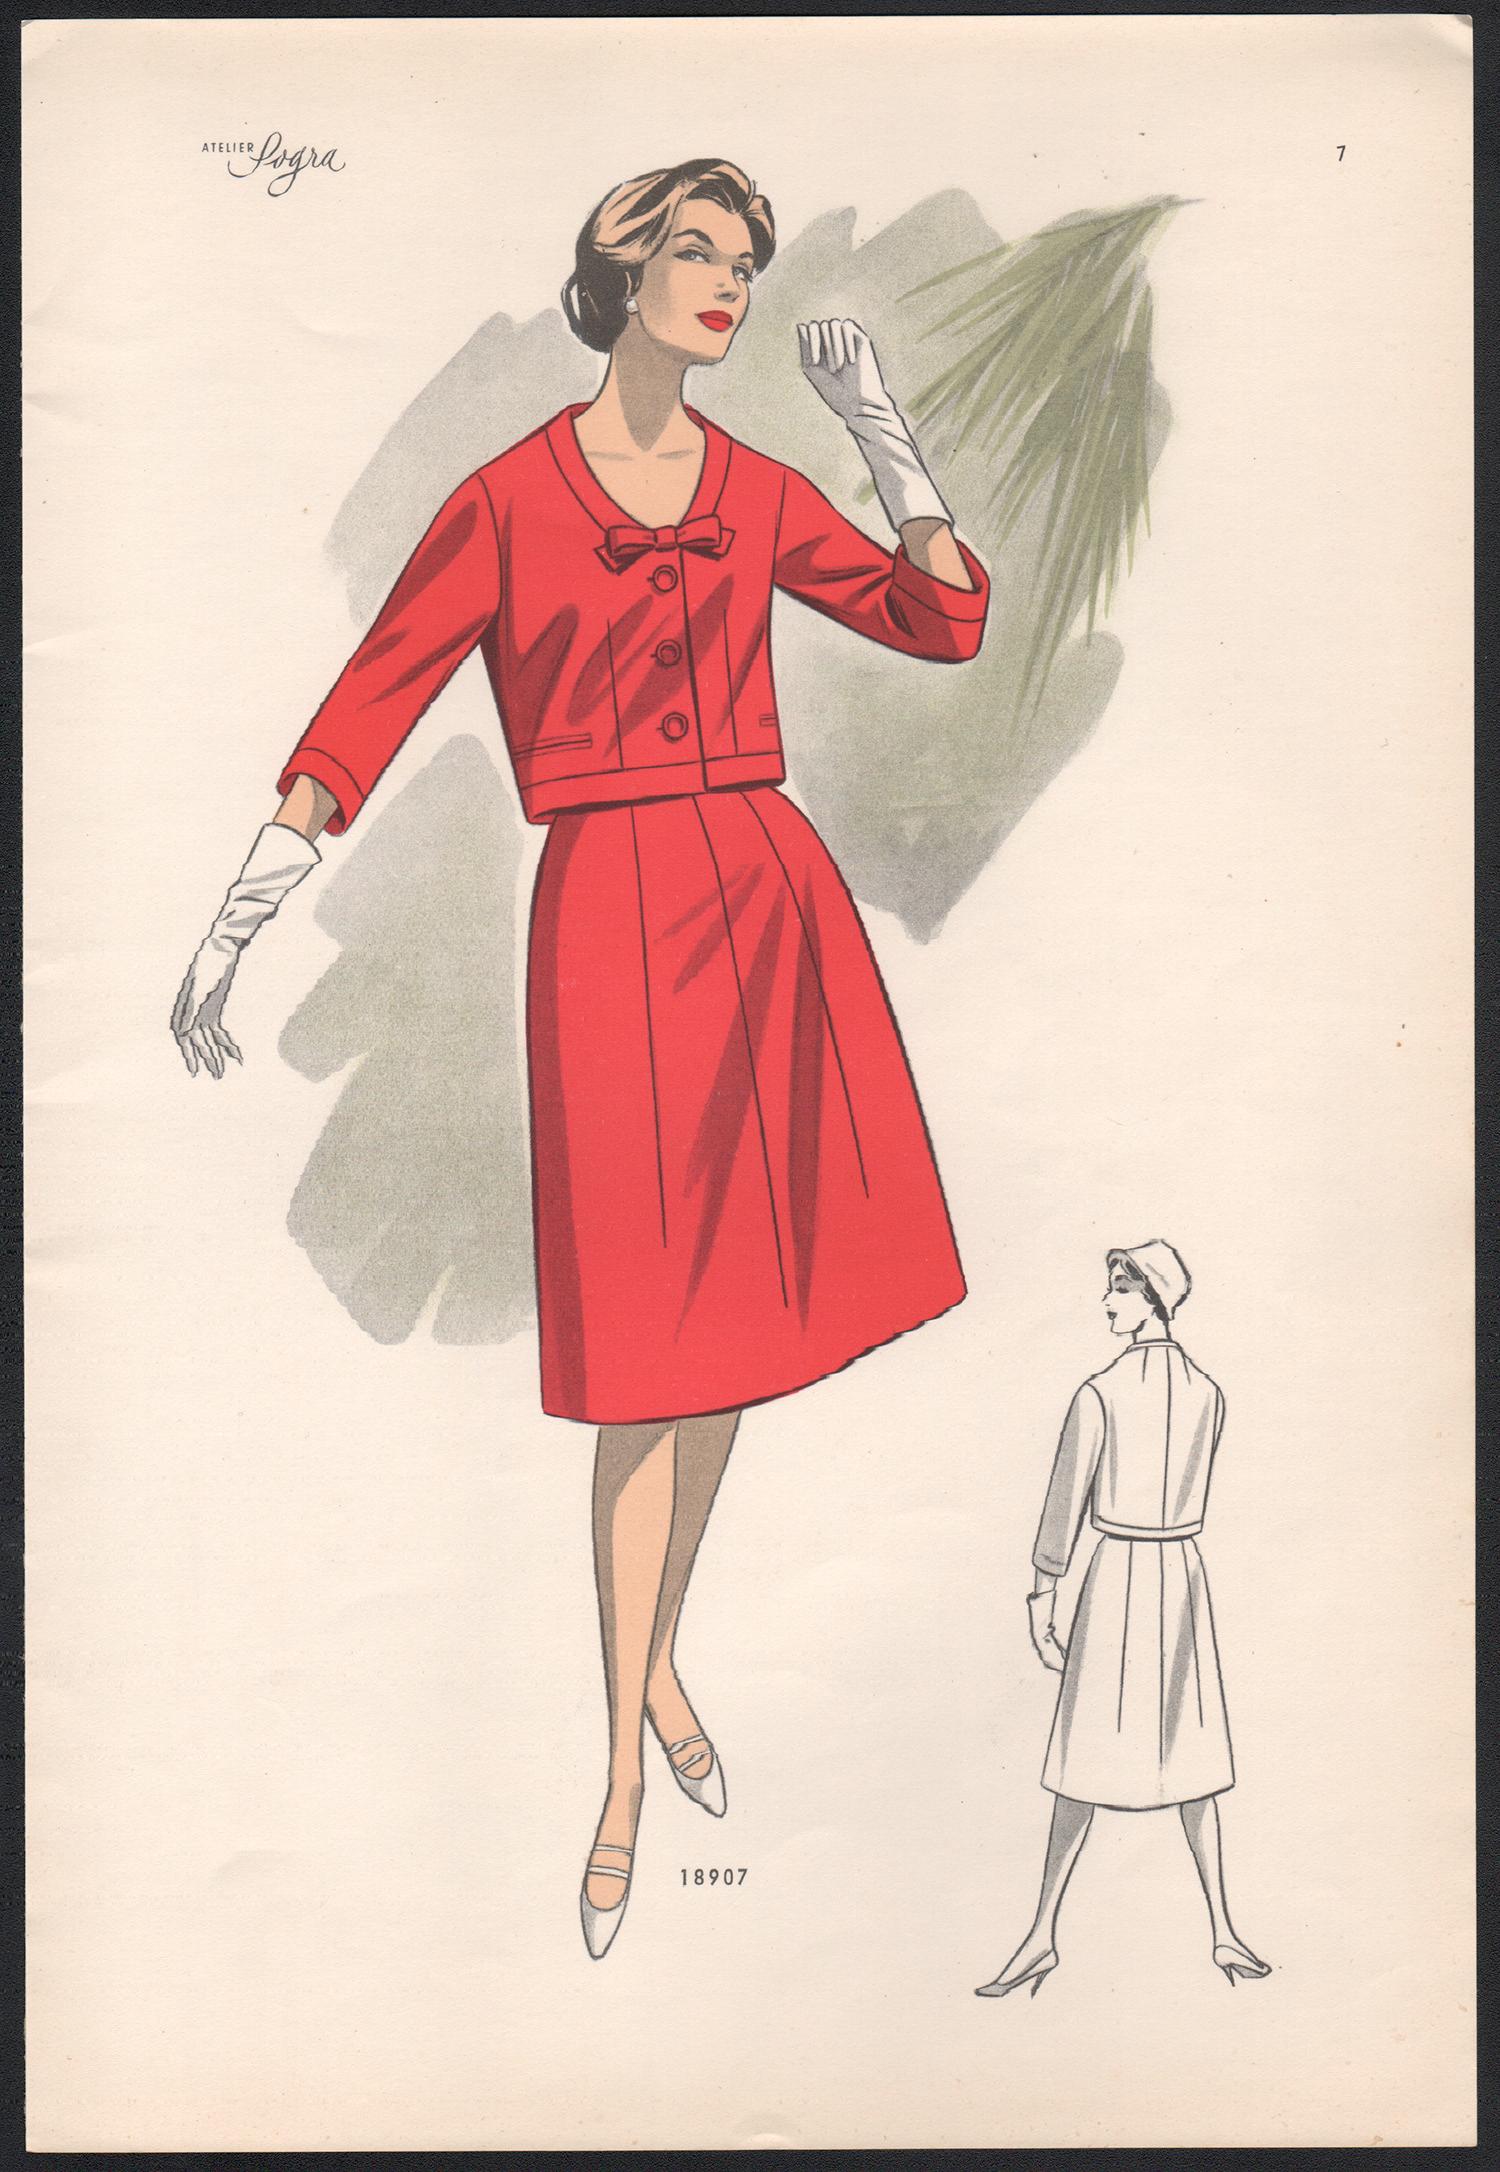 European Mid-Century 1959 Fashion Design Vintage Lithograph Print